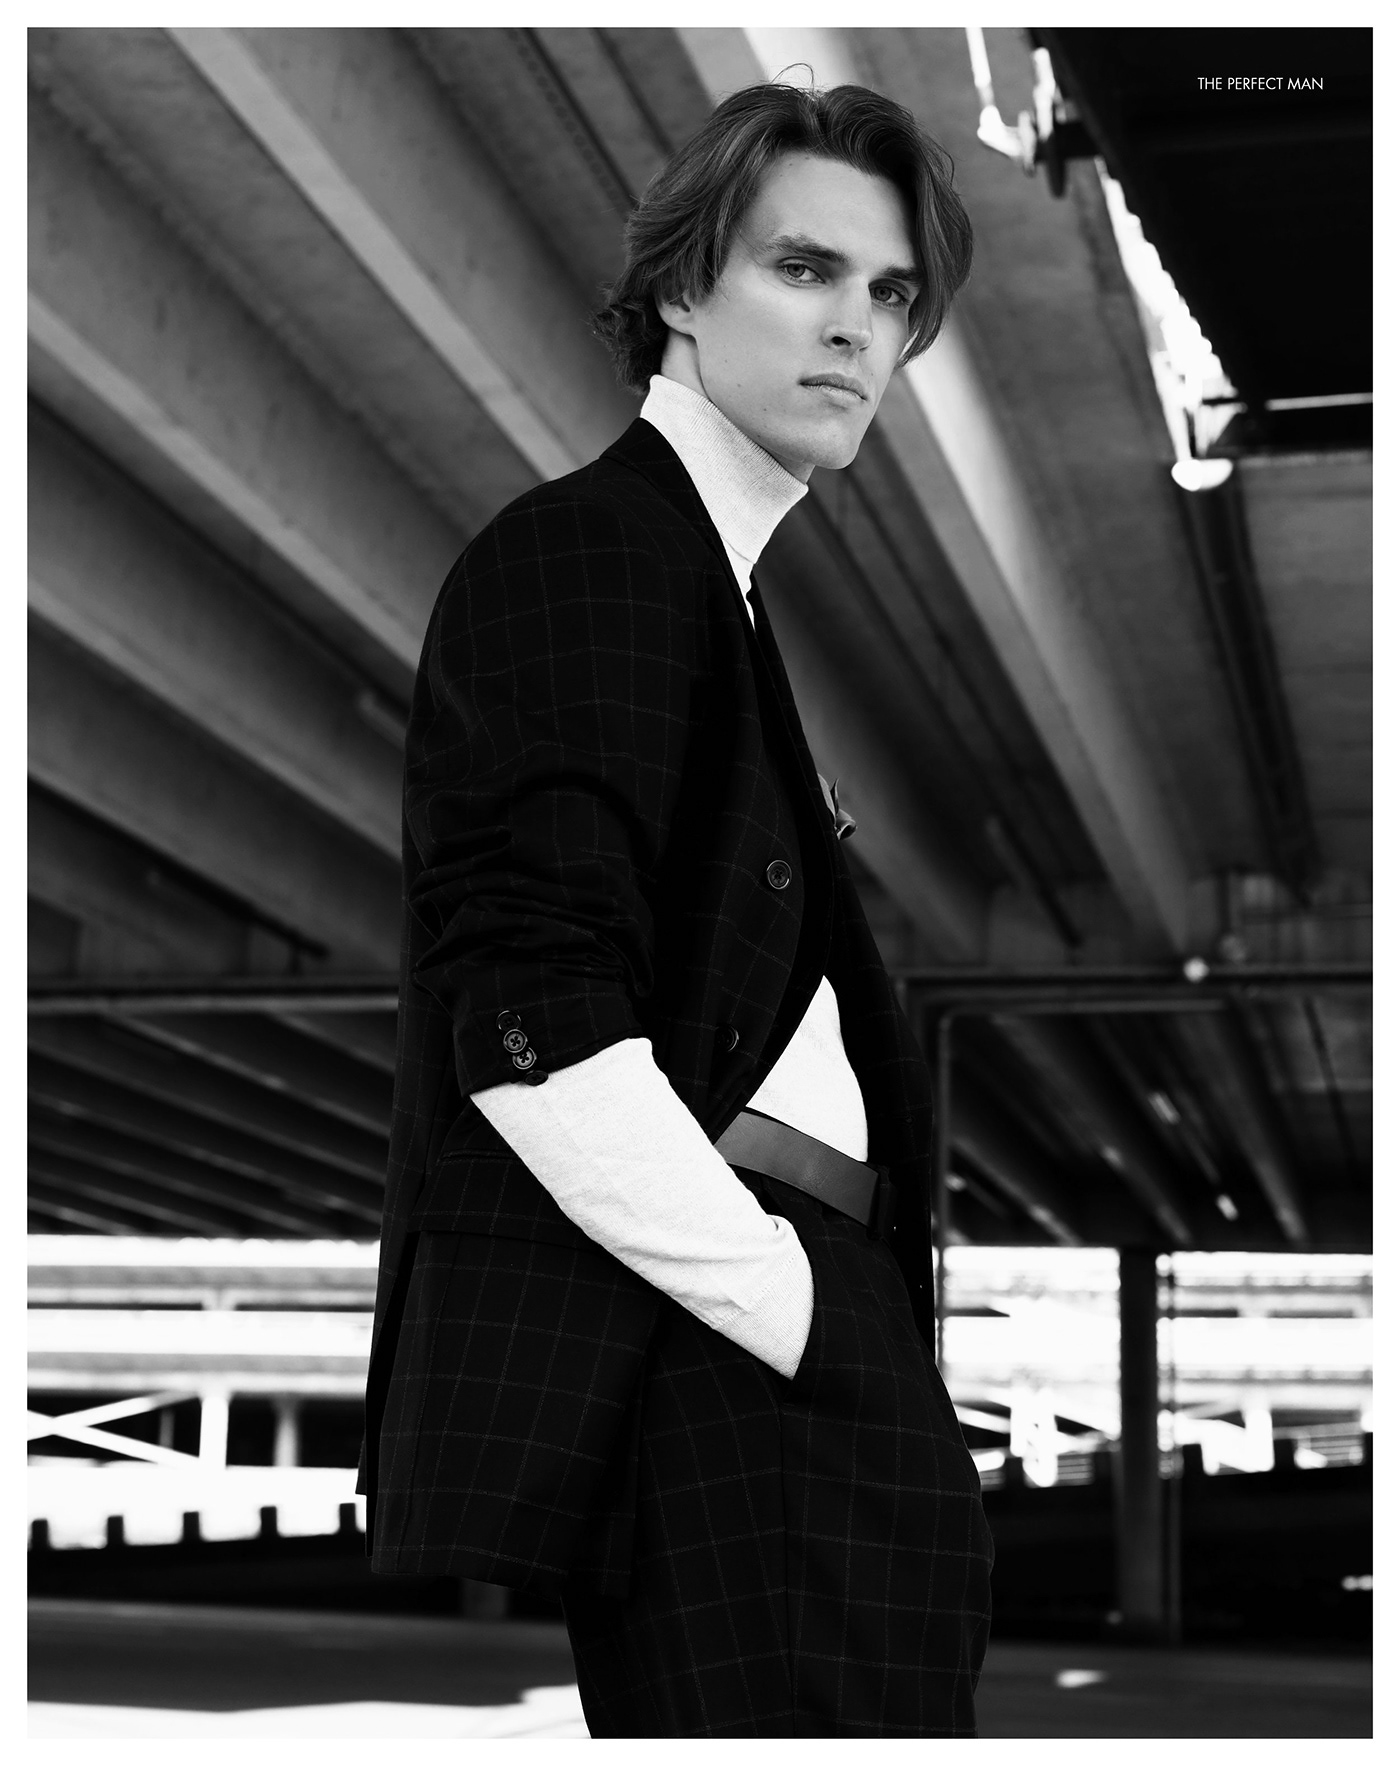 Style elegant suits suit style Menswear Fashion  mensfashion masculine editorial Urban